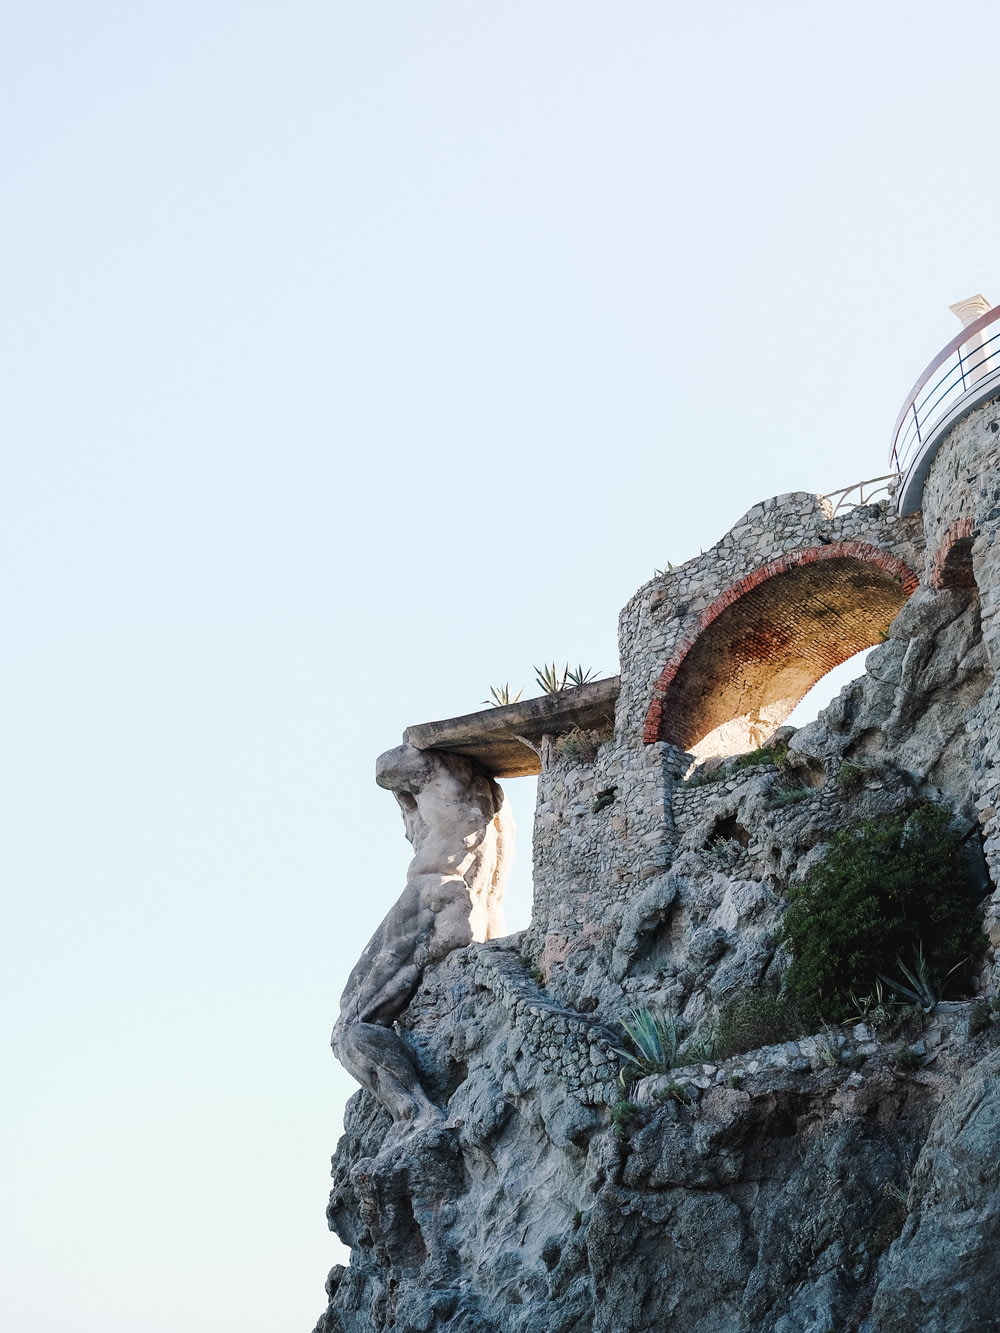 stone structure near cliff